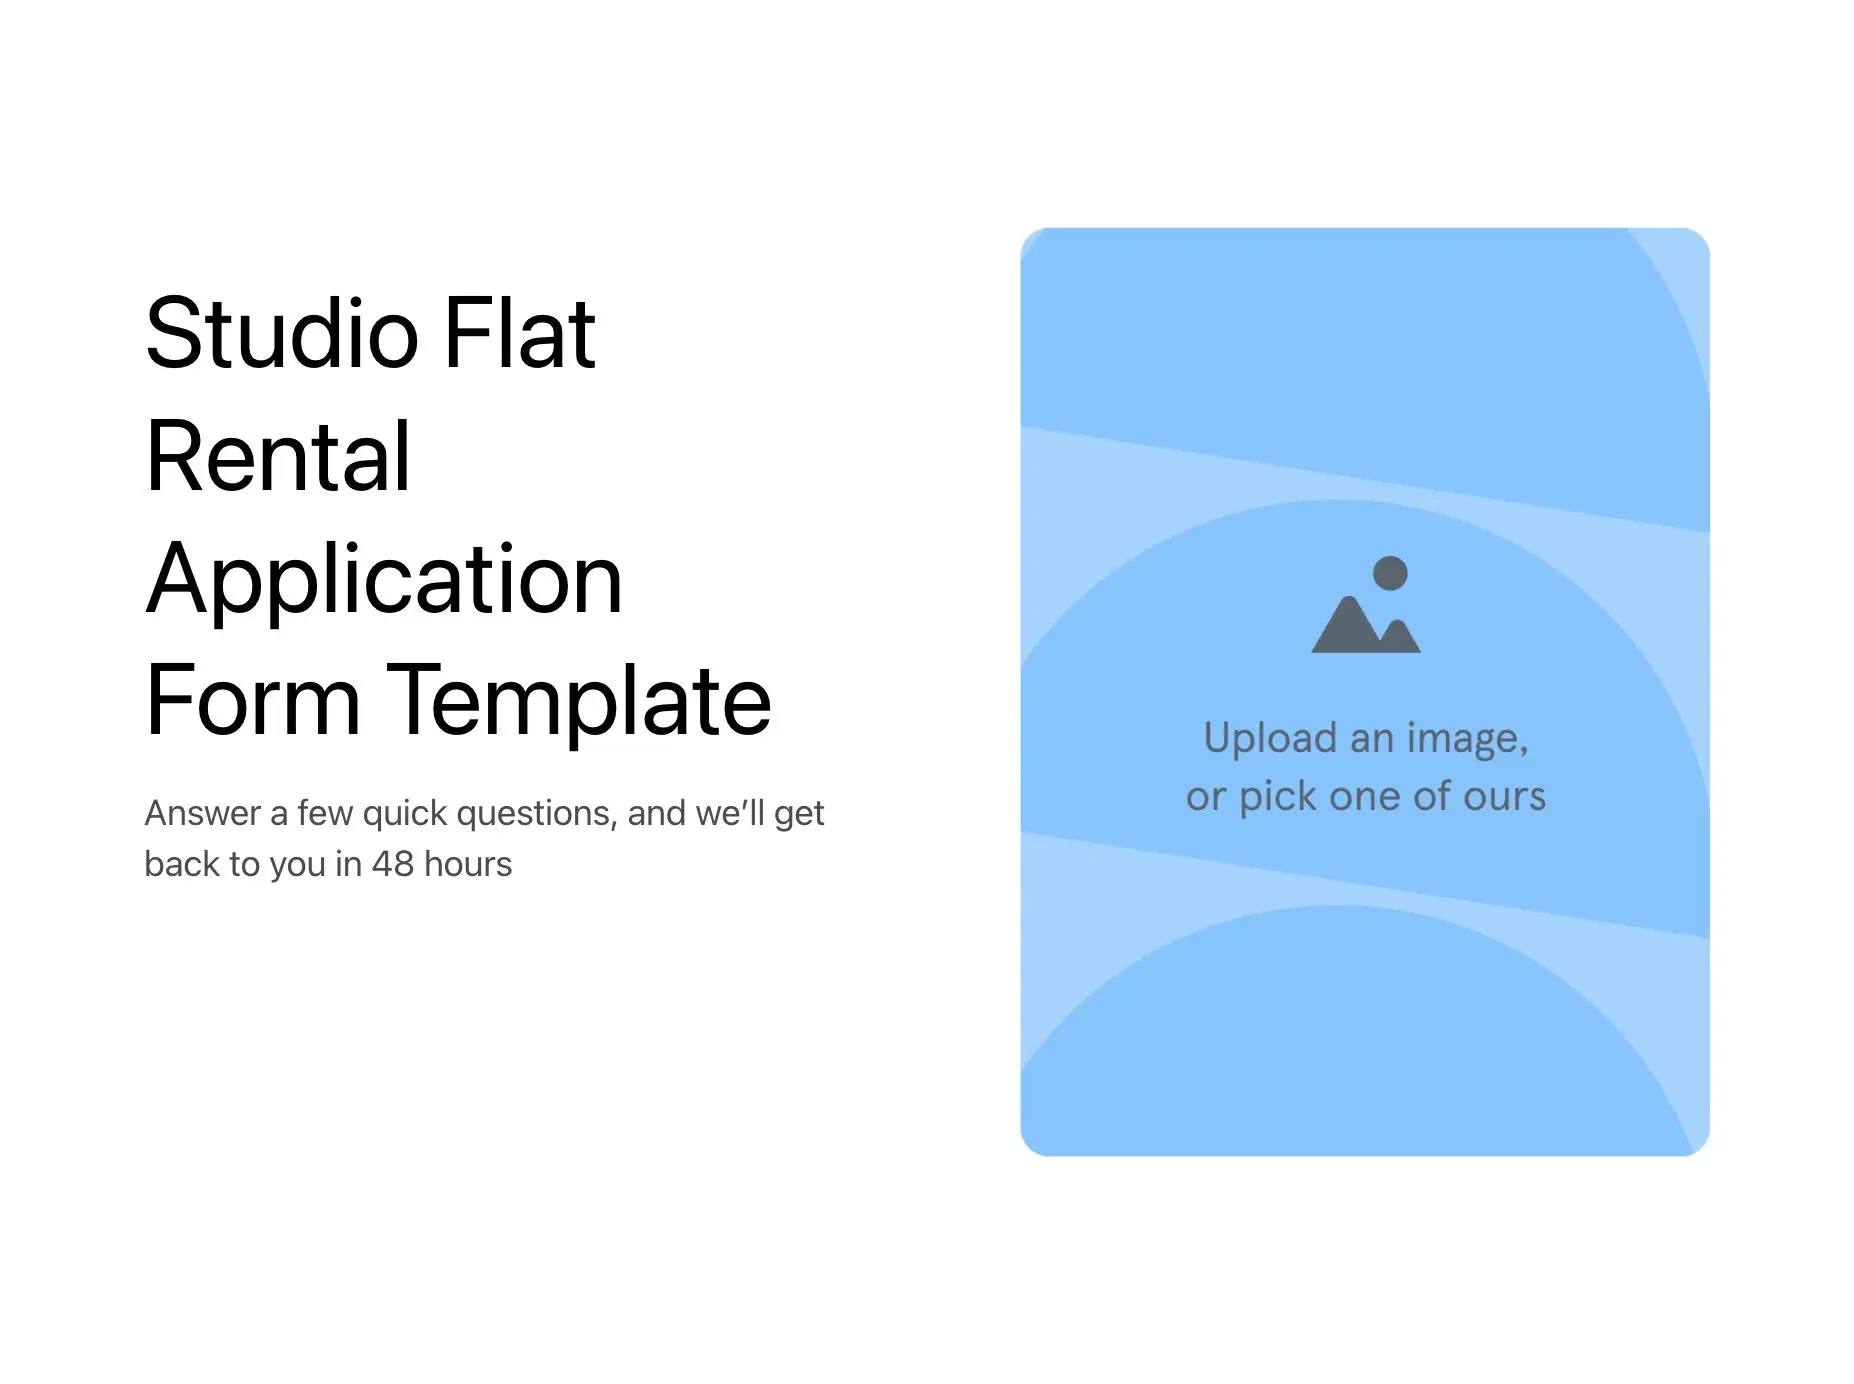 Studio Flat Rental Application Form Template Hero